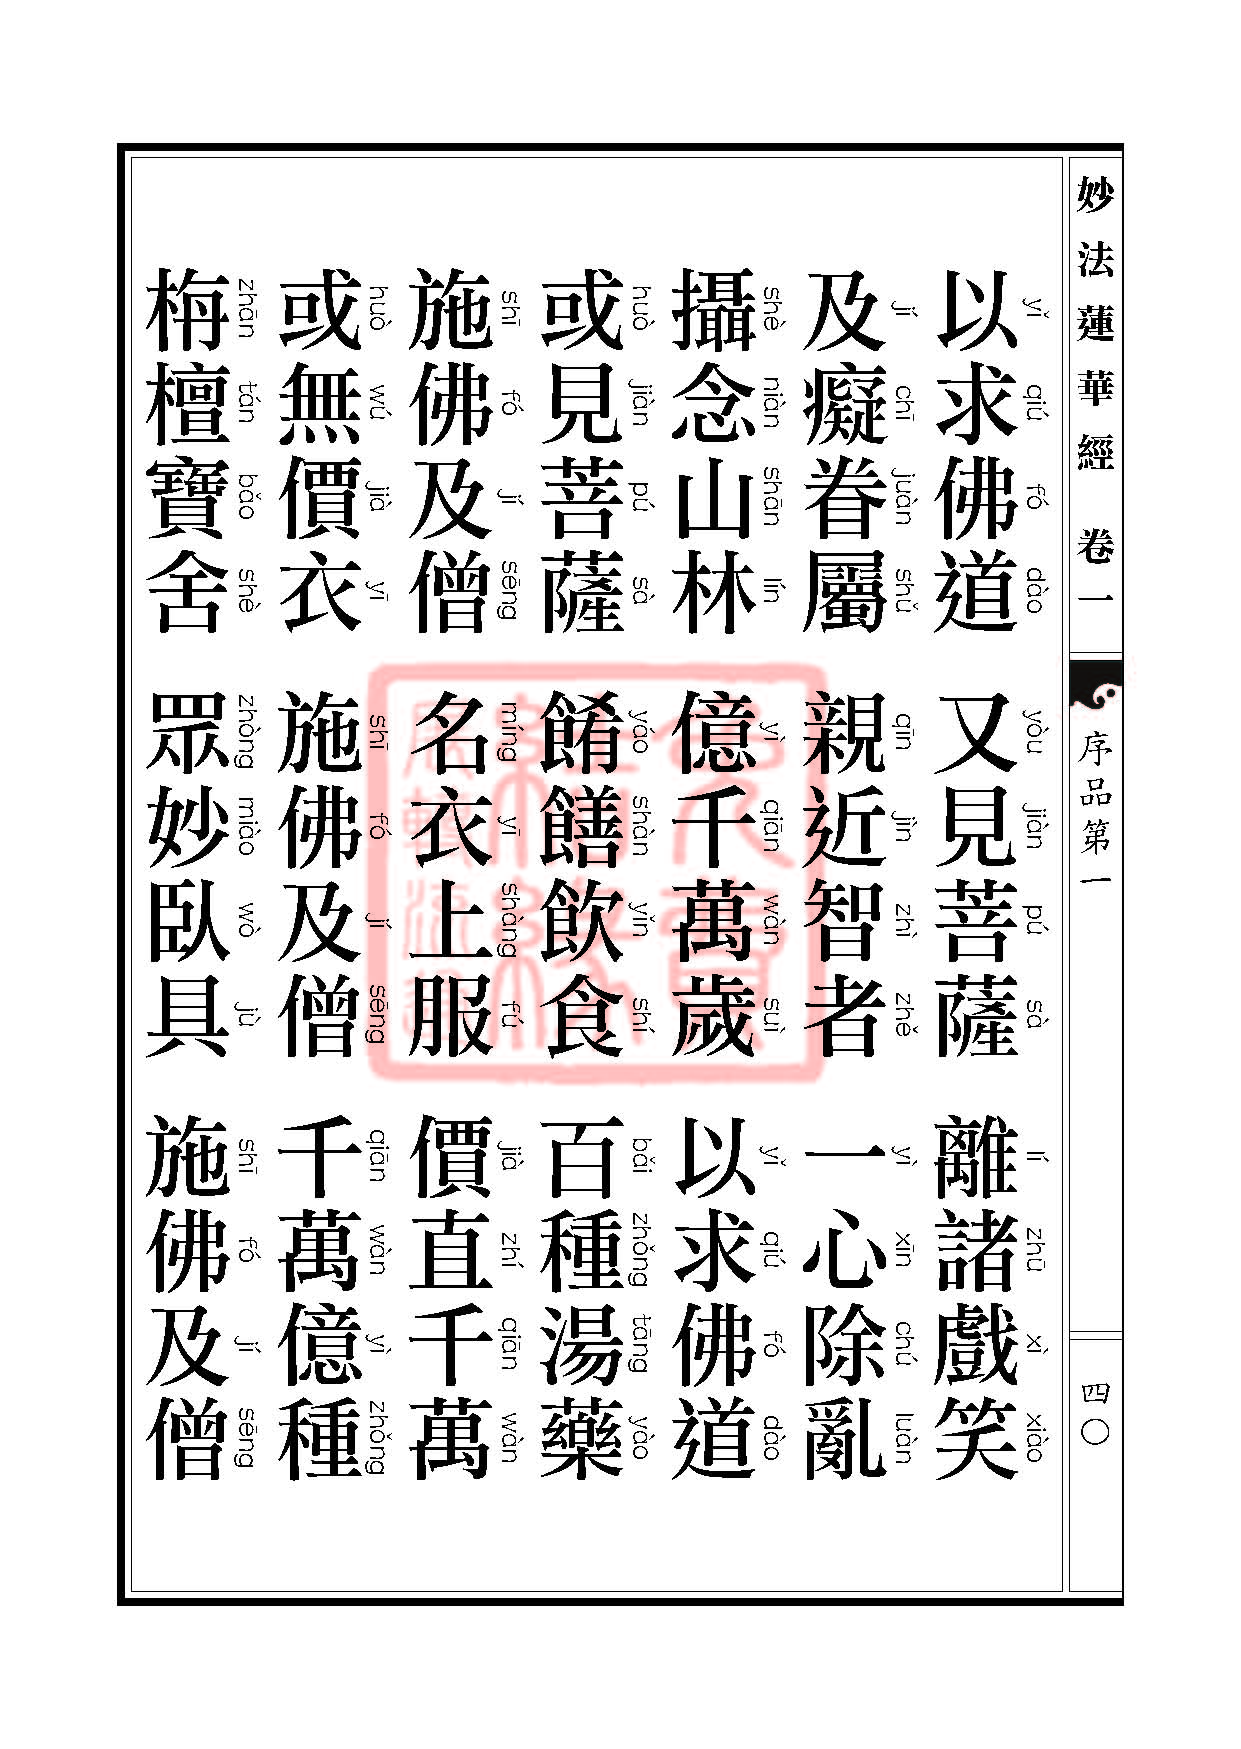 Book_FHJ_HK-A6-PY_Web_页面_040.jpg